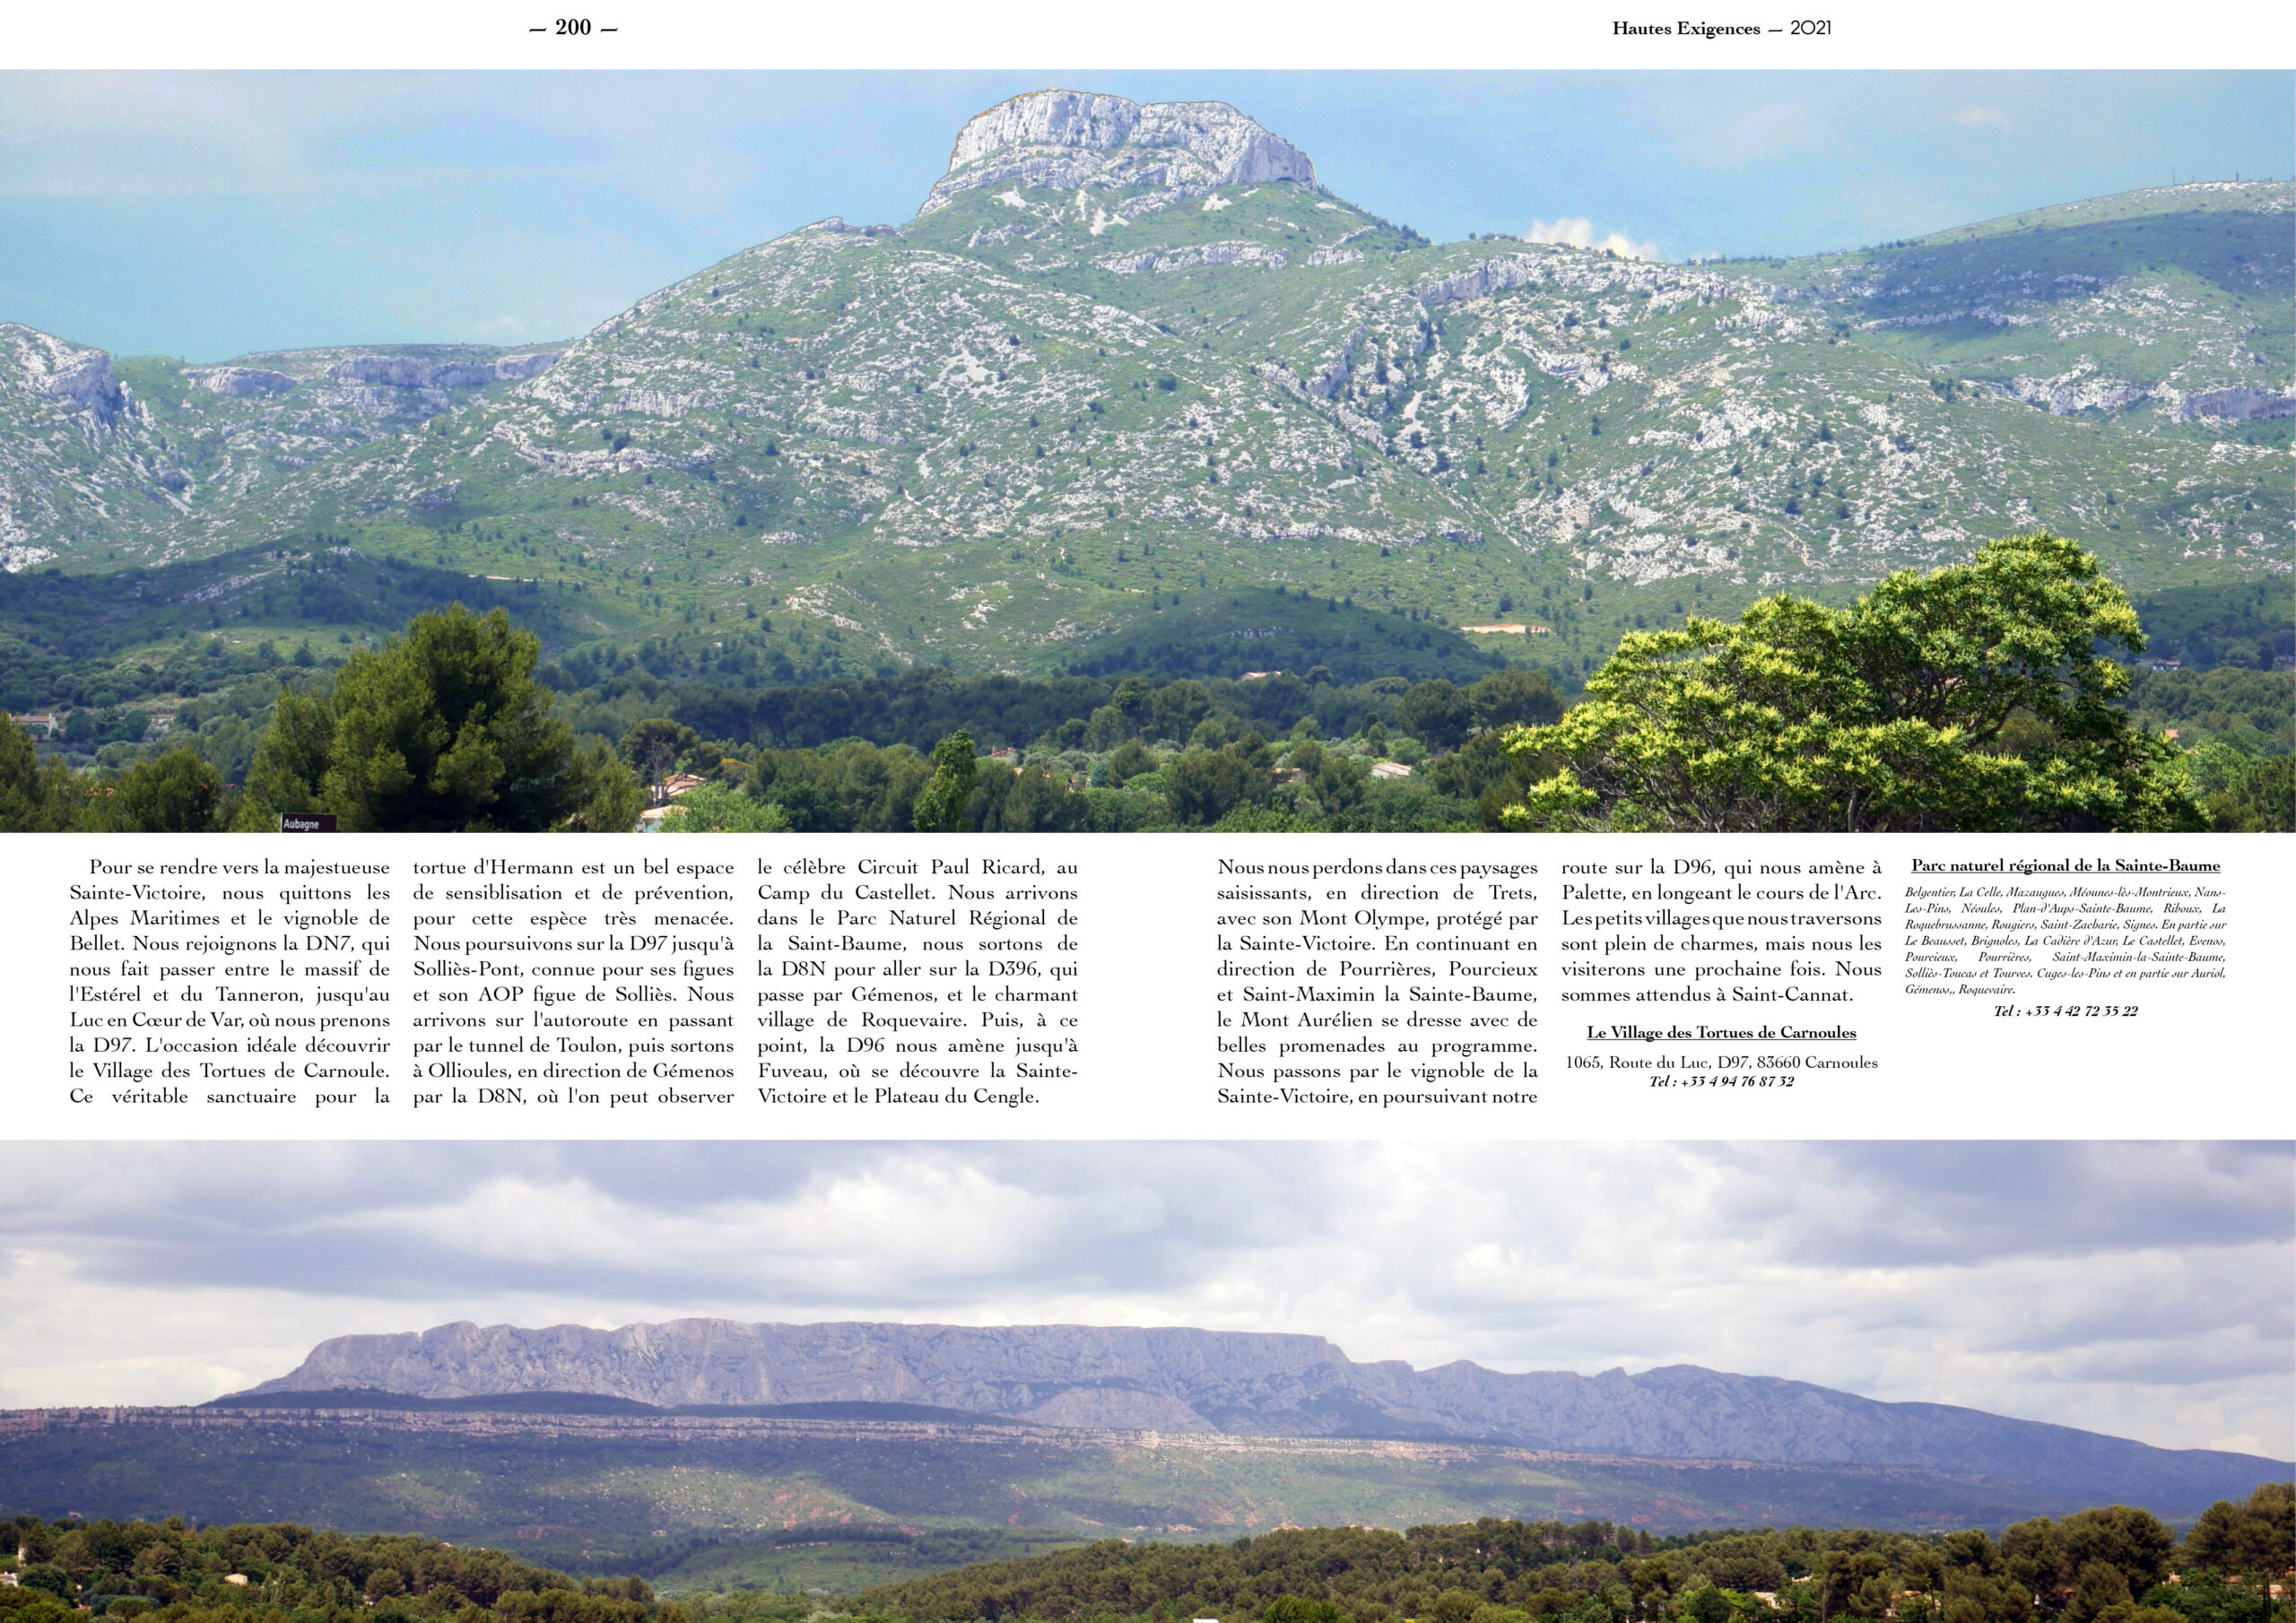 Hautes Exigences Magazine Hors Serie 2021 page 198-199